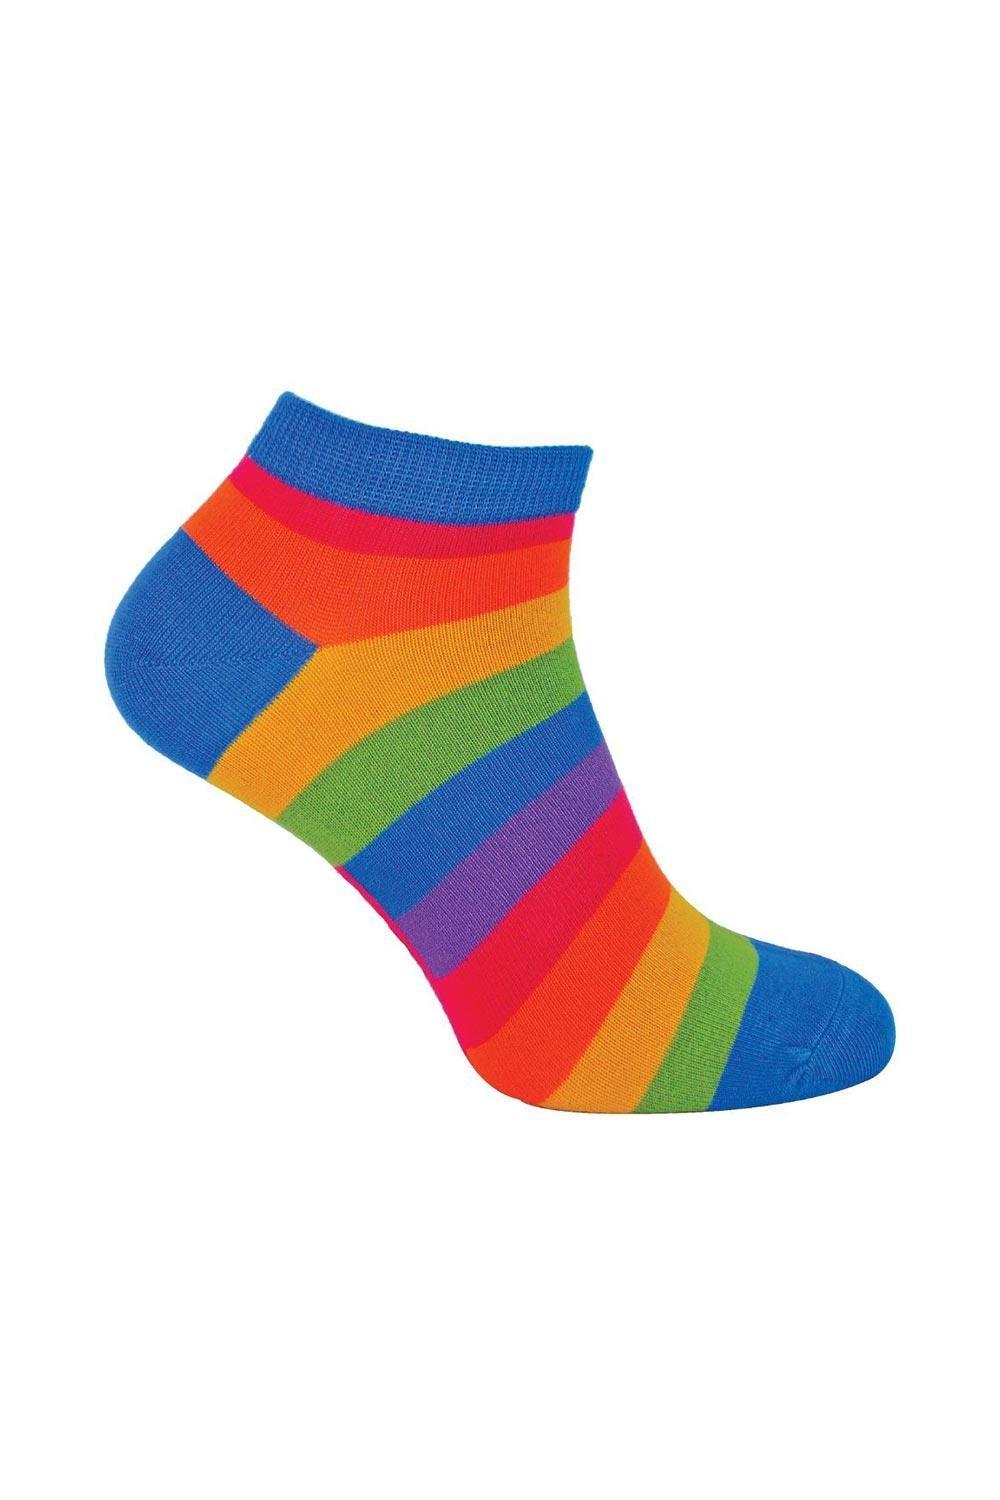 Bamboo Rainbow Trainer Socks - Colourful Striped Socks